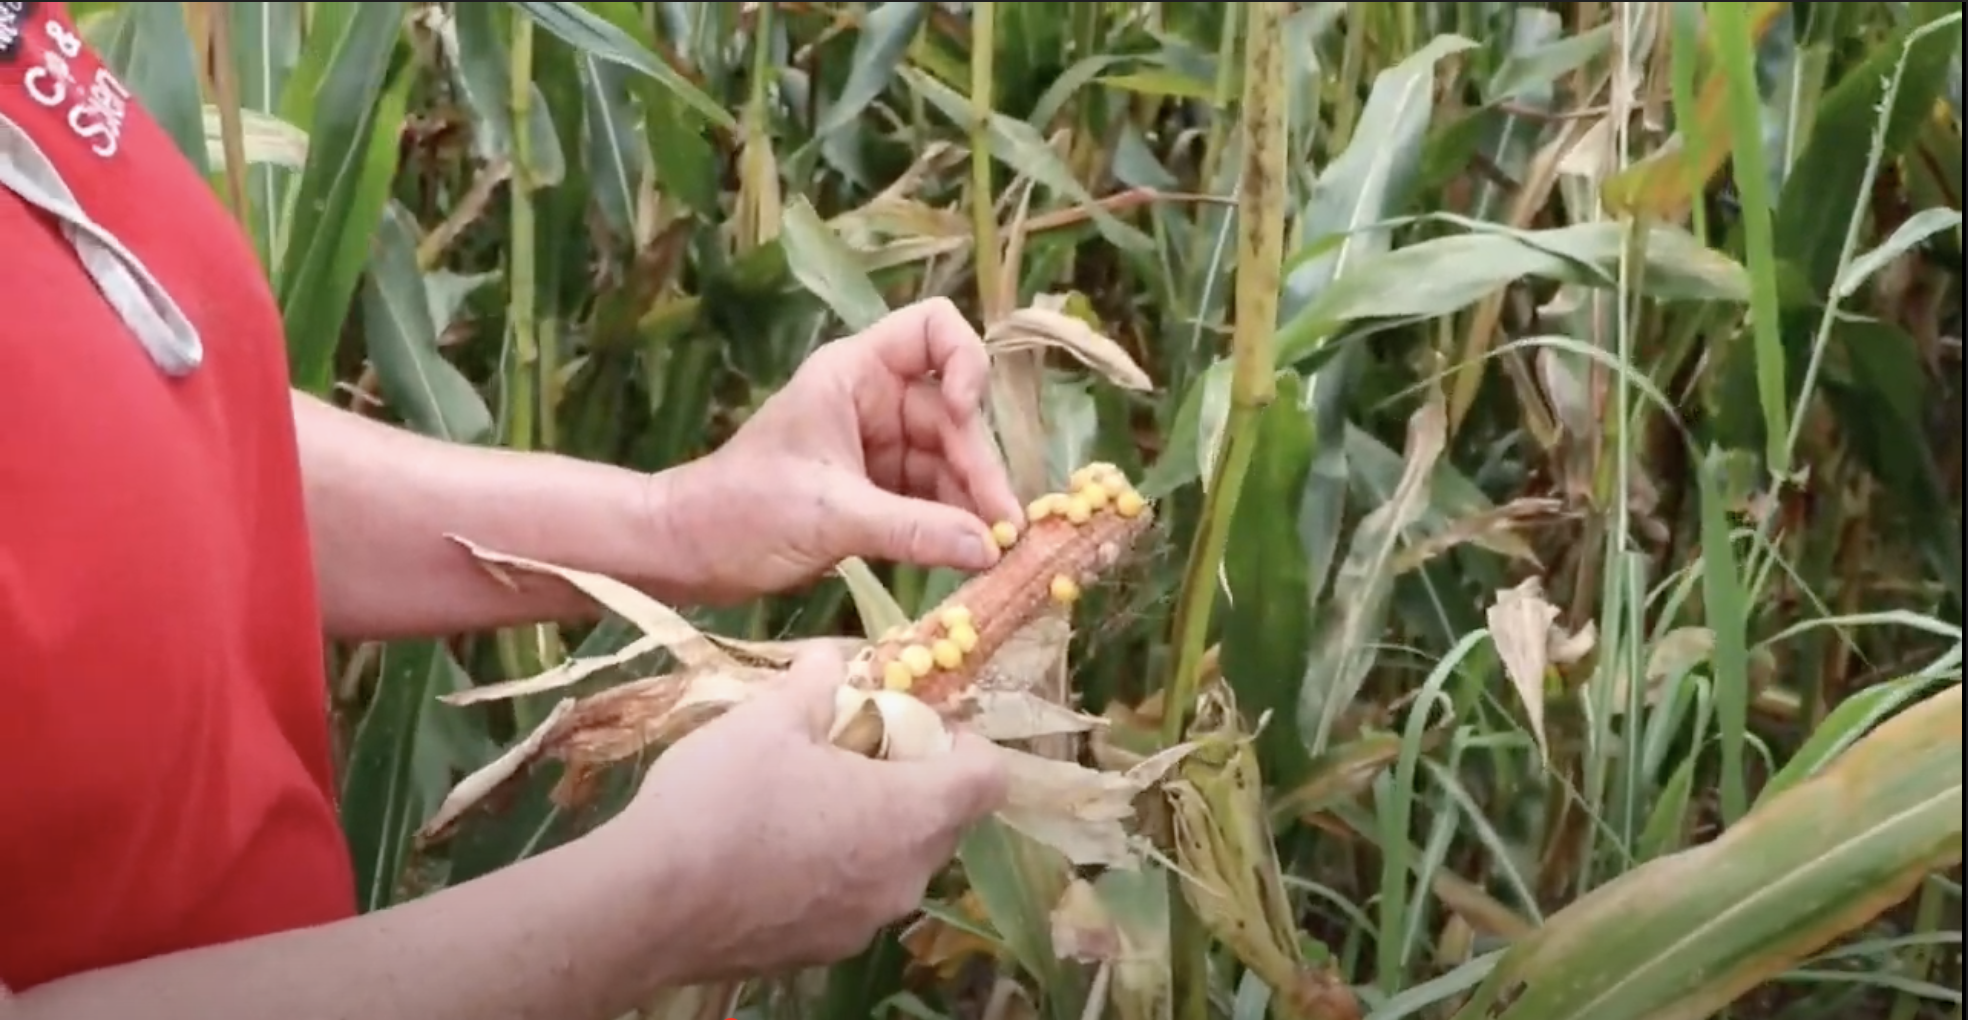 hands holding damaged ear of corn